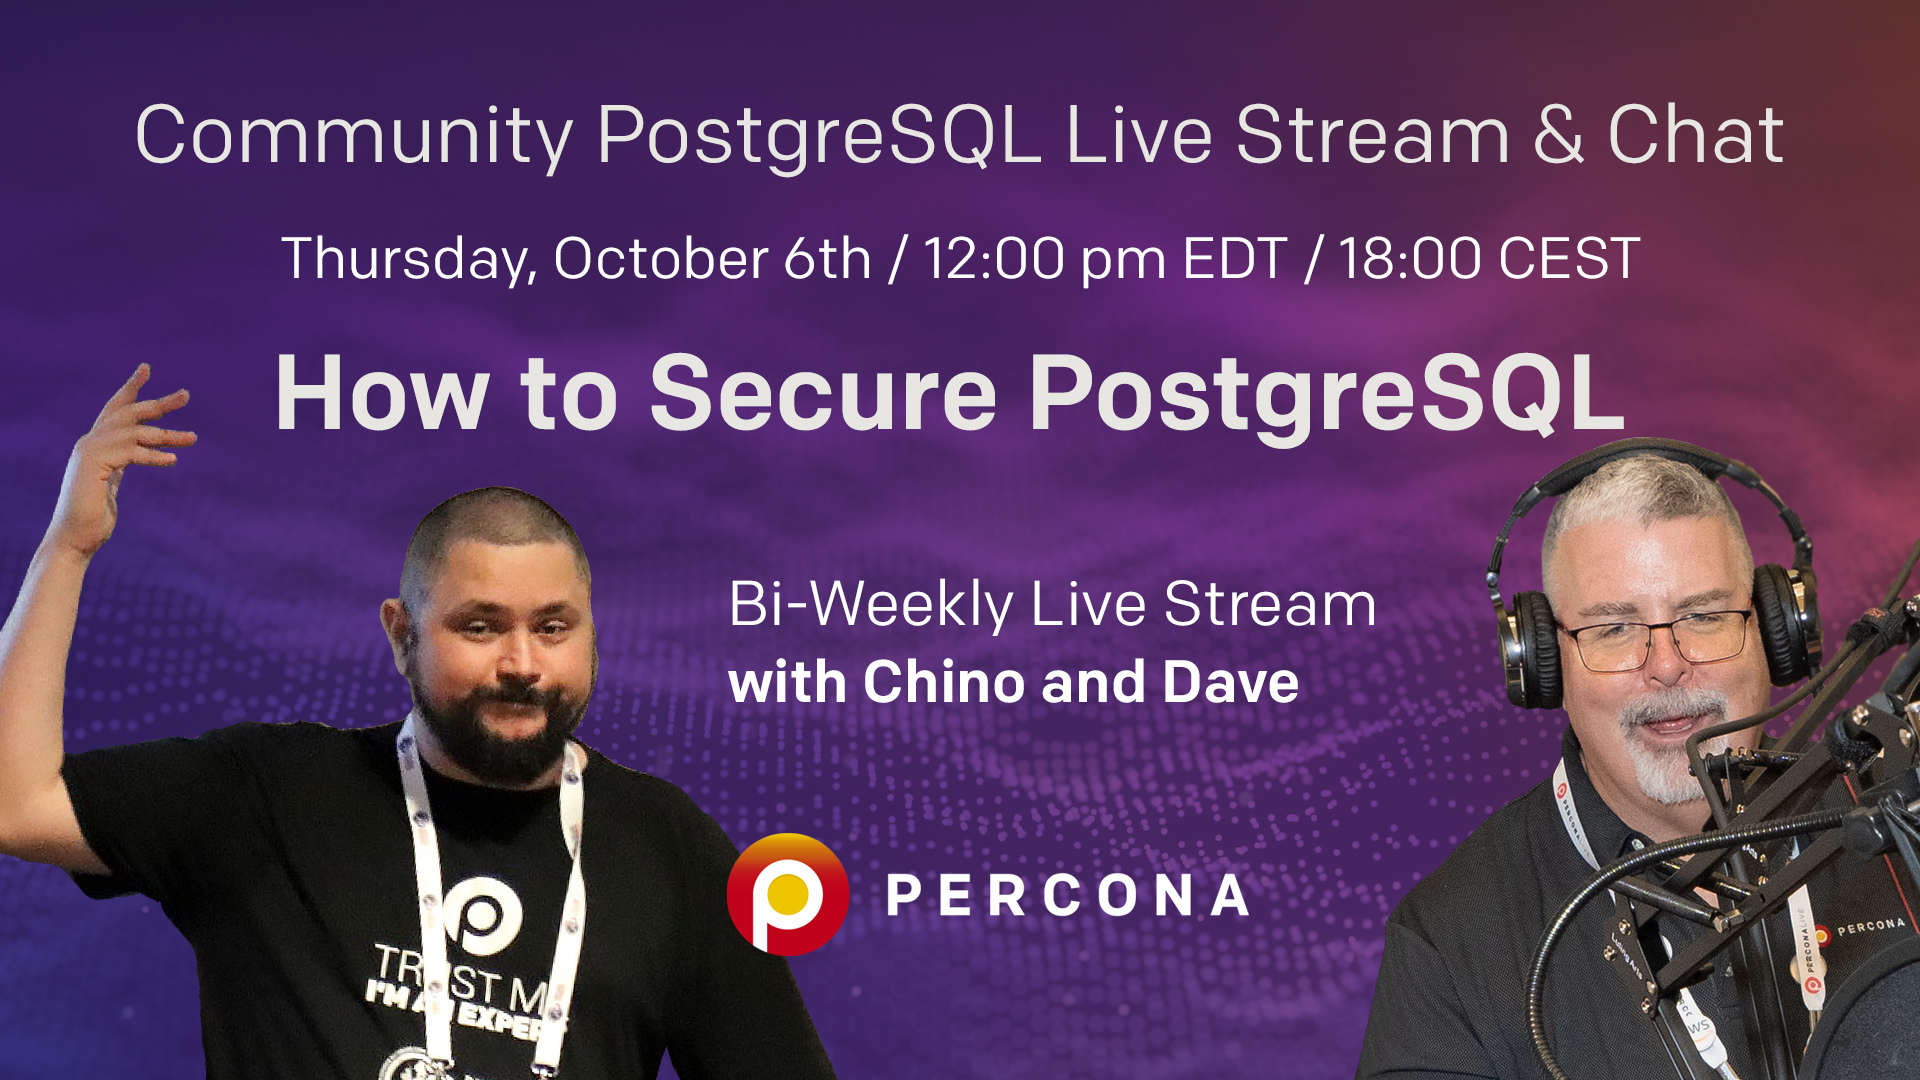 Percona Community PostgreSQL Live Stream & Chat - Oct 6th